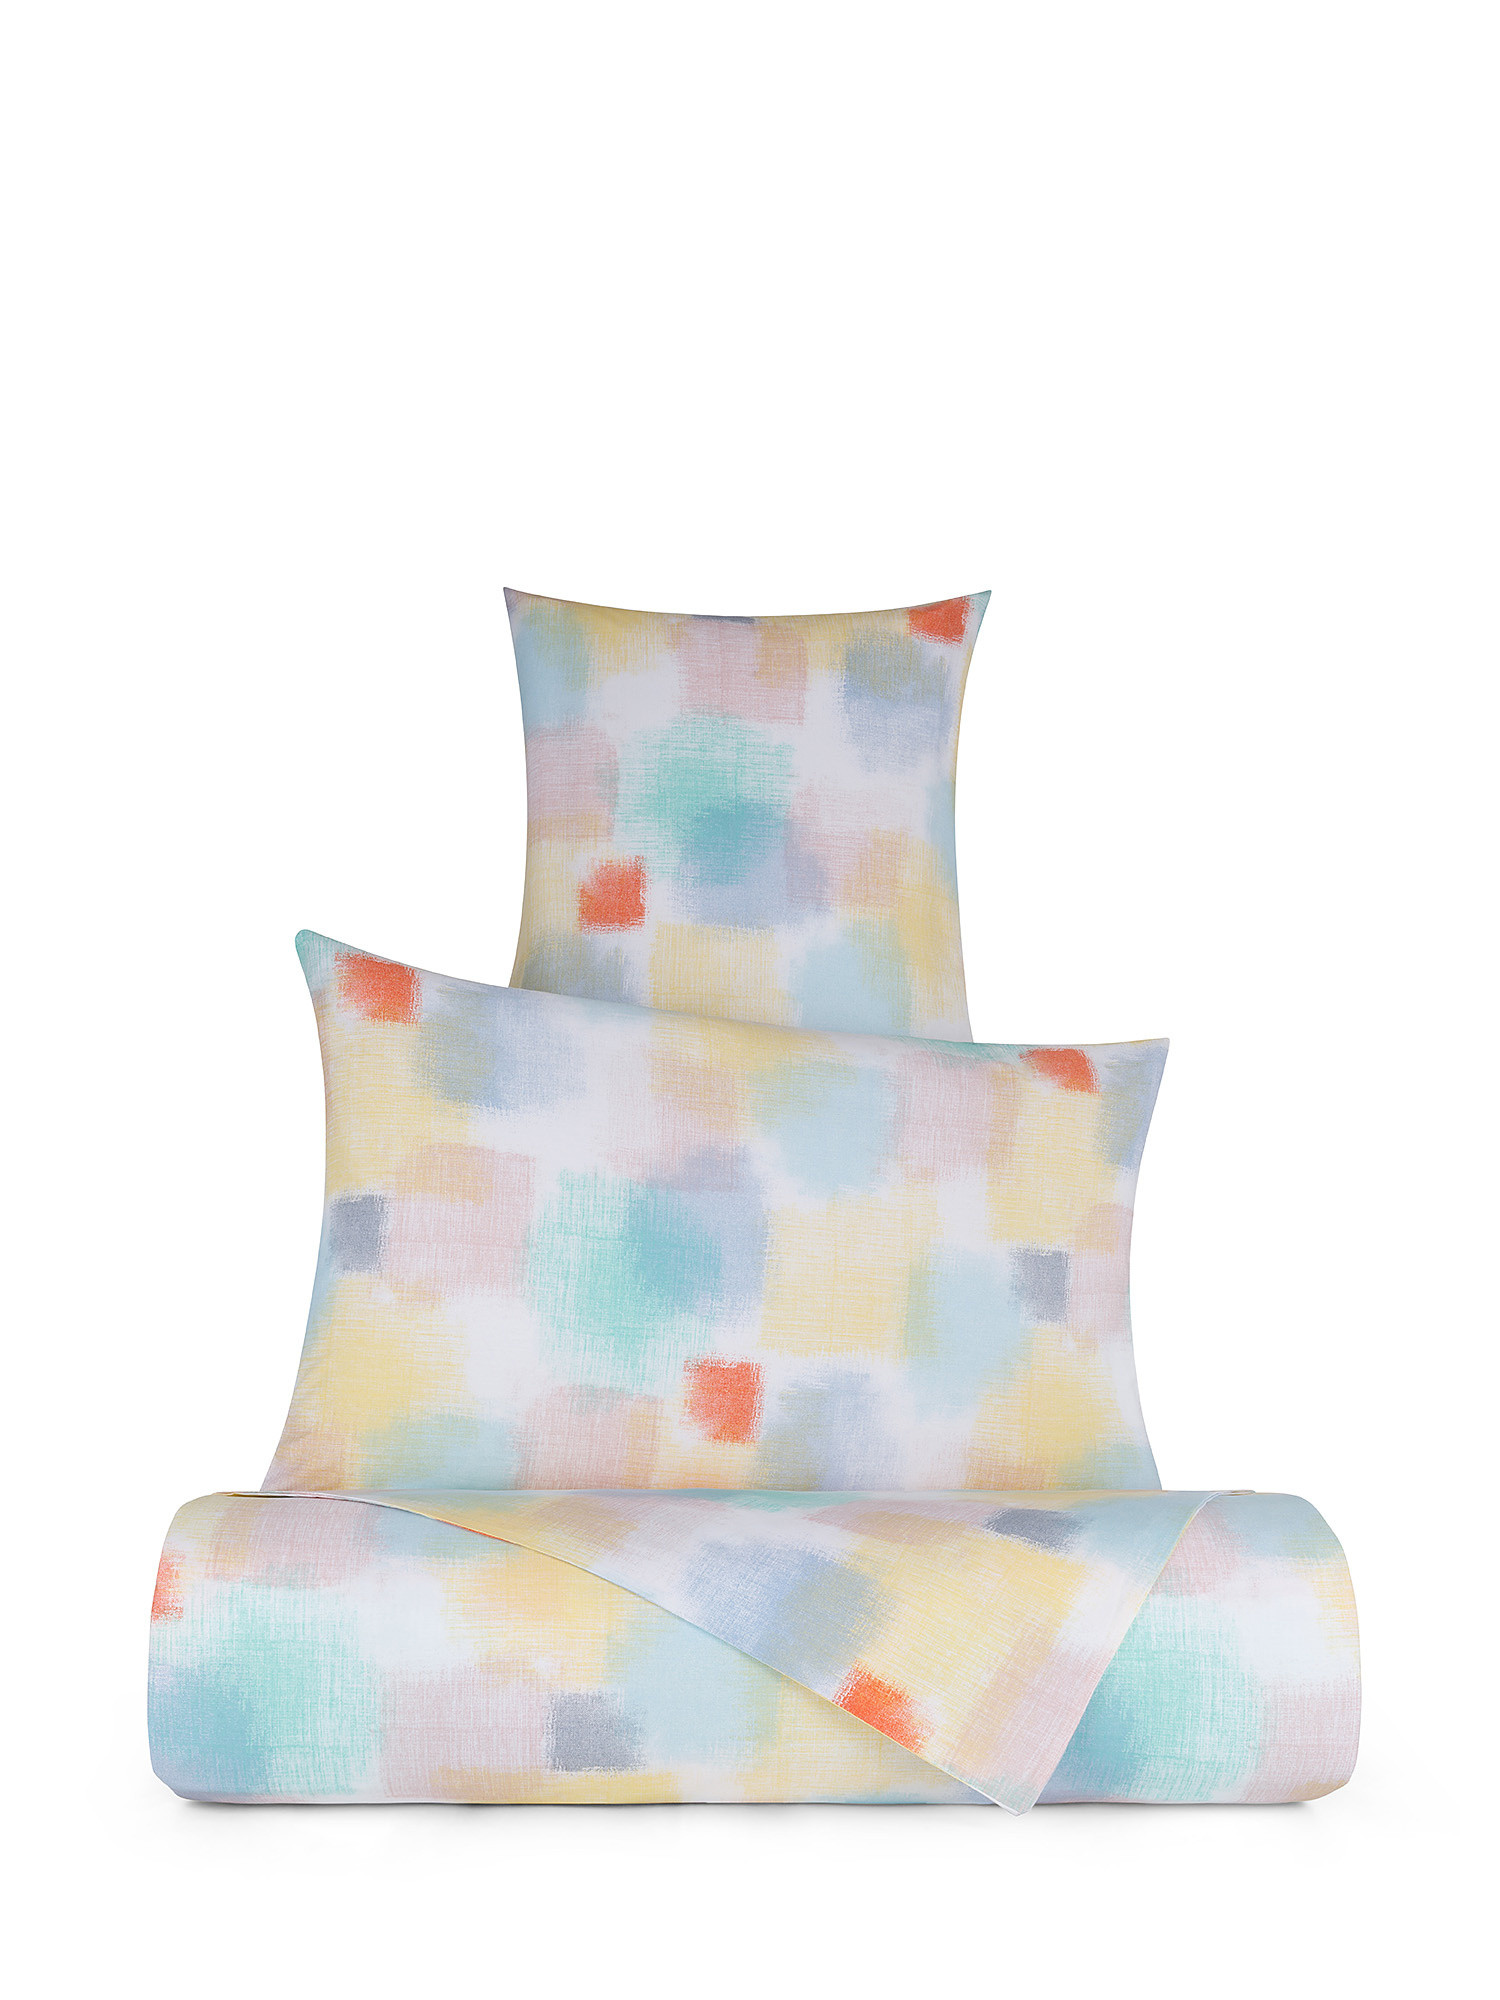 Watercolor patterned cotton percale duvet cover set, Multicolor, large image number 0